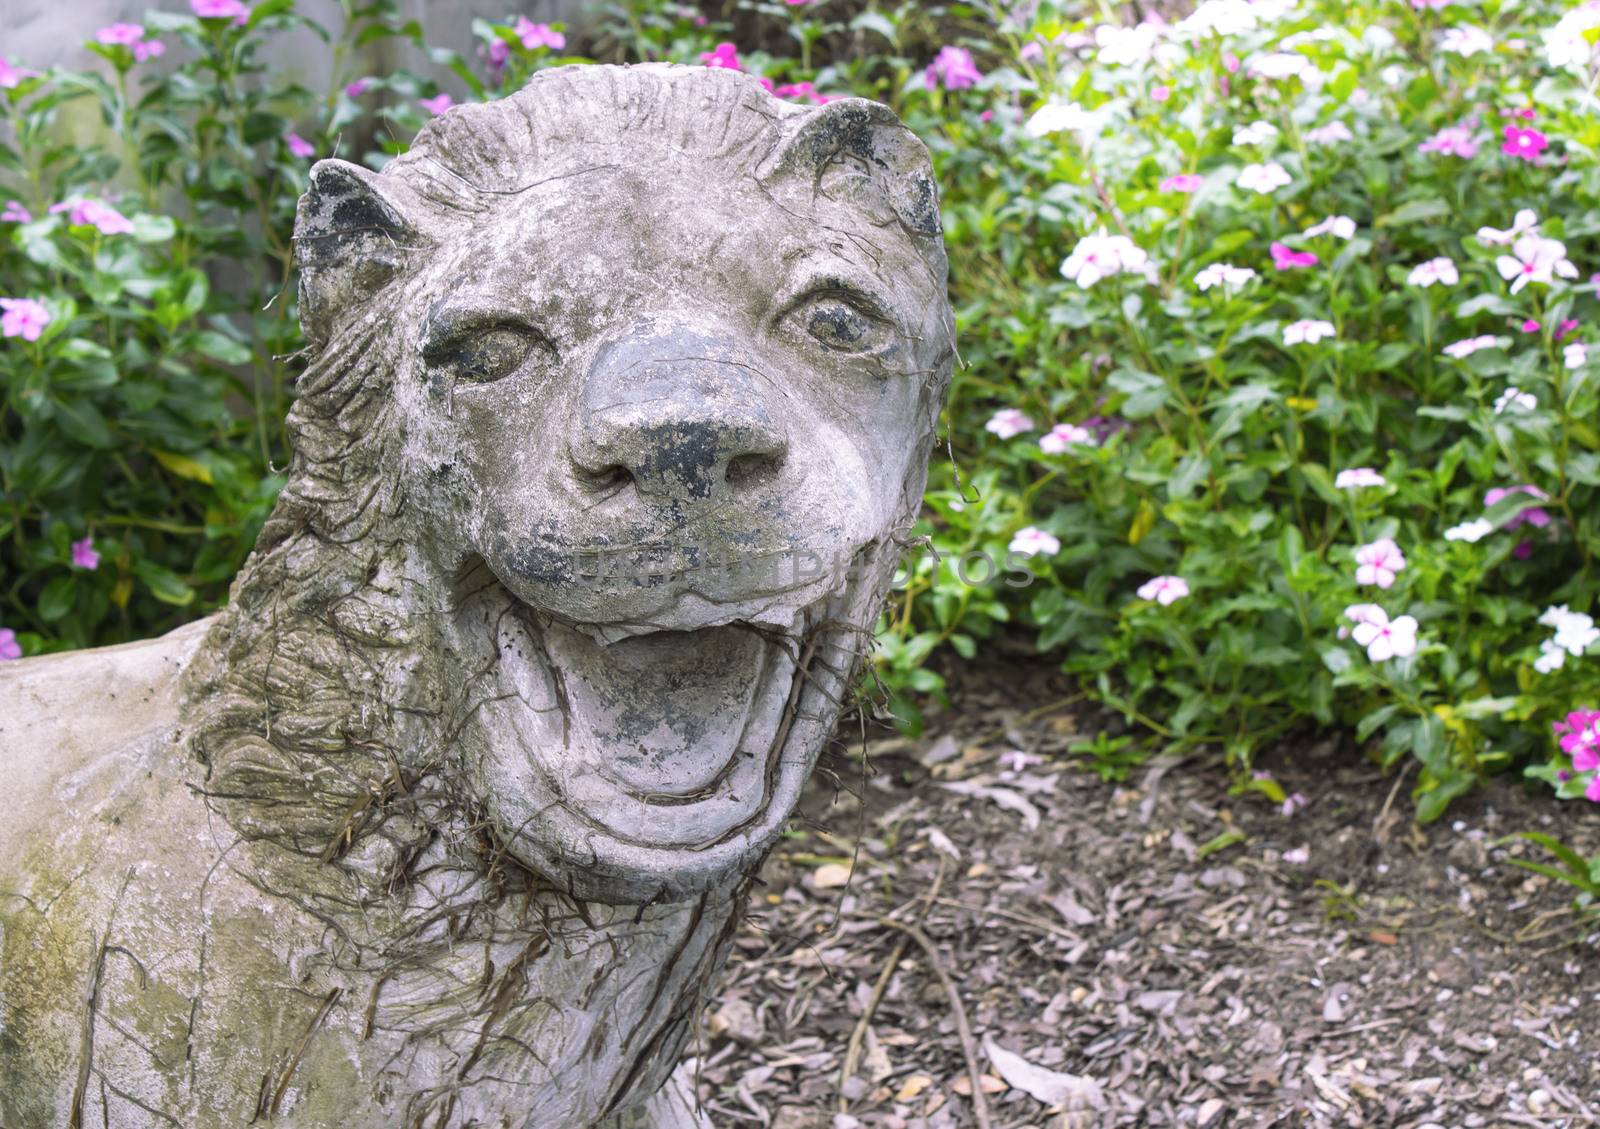 lion statue in park by sutipp11